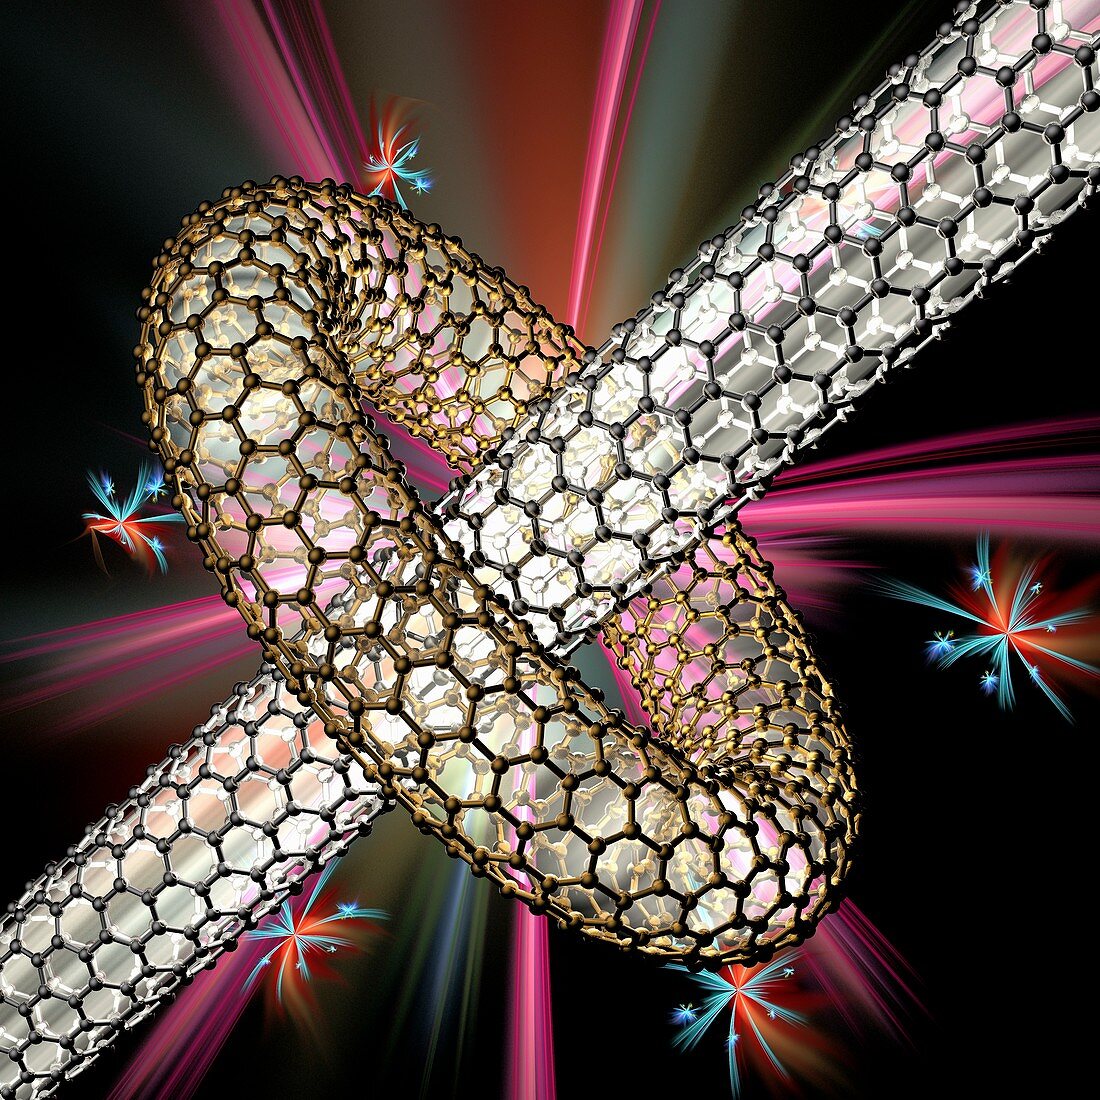 Nanostructures,artwork